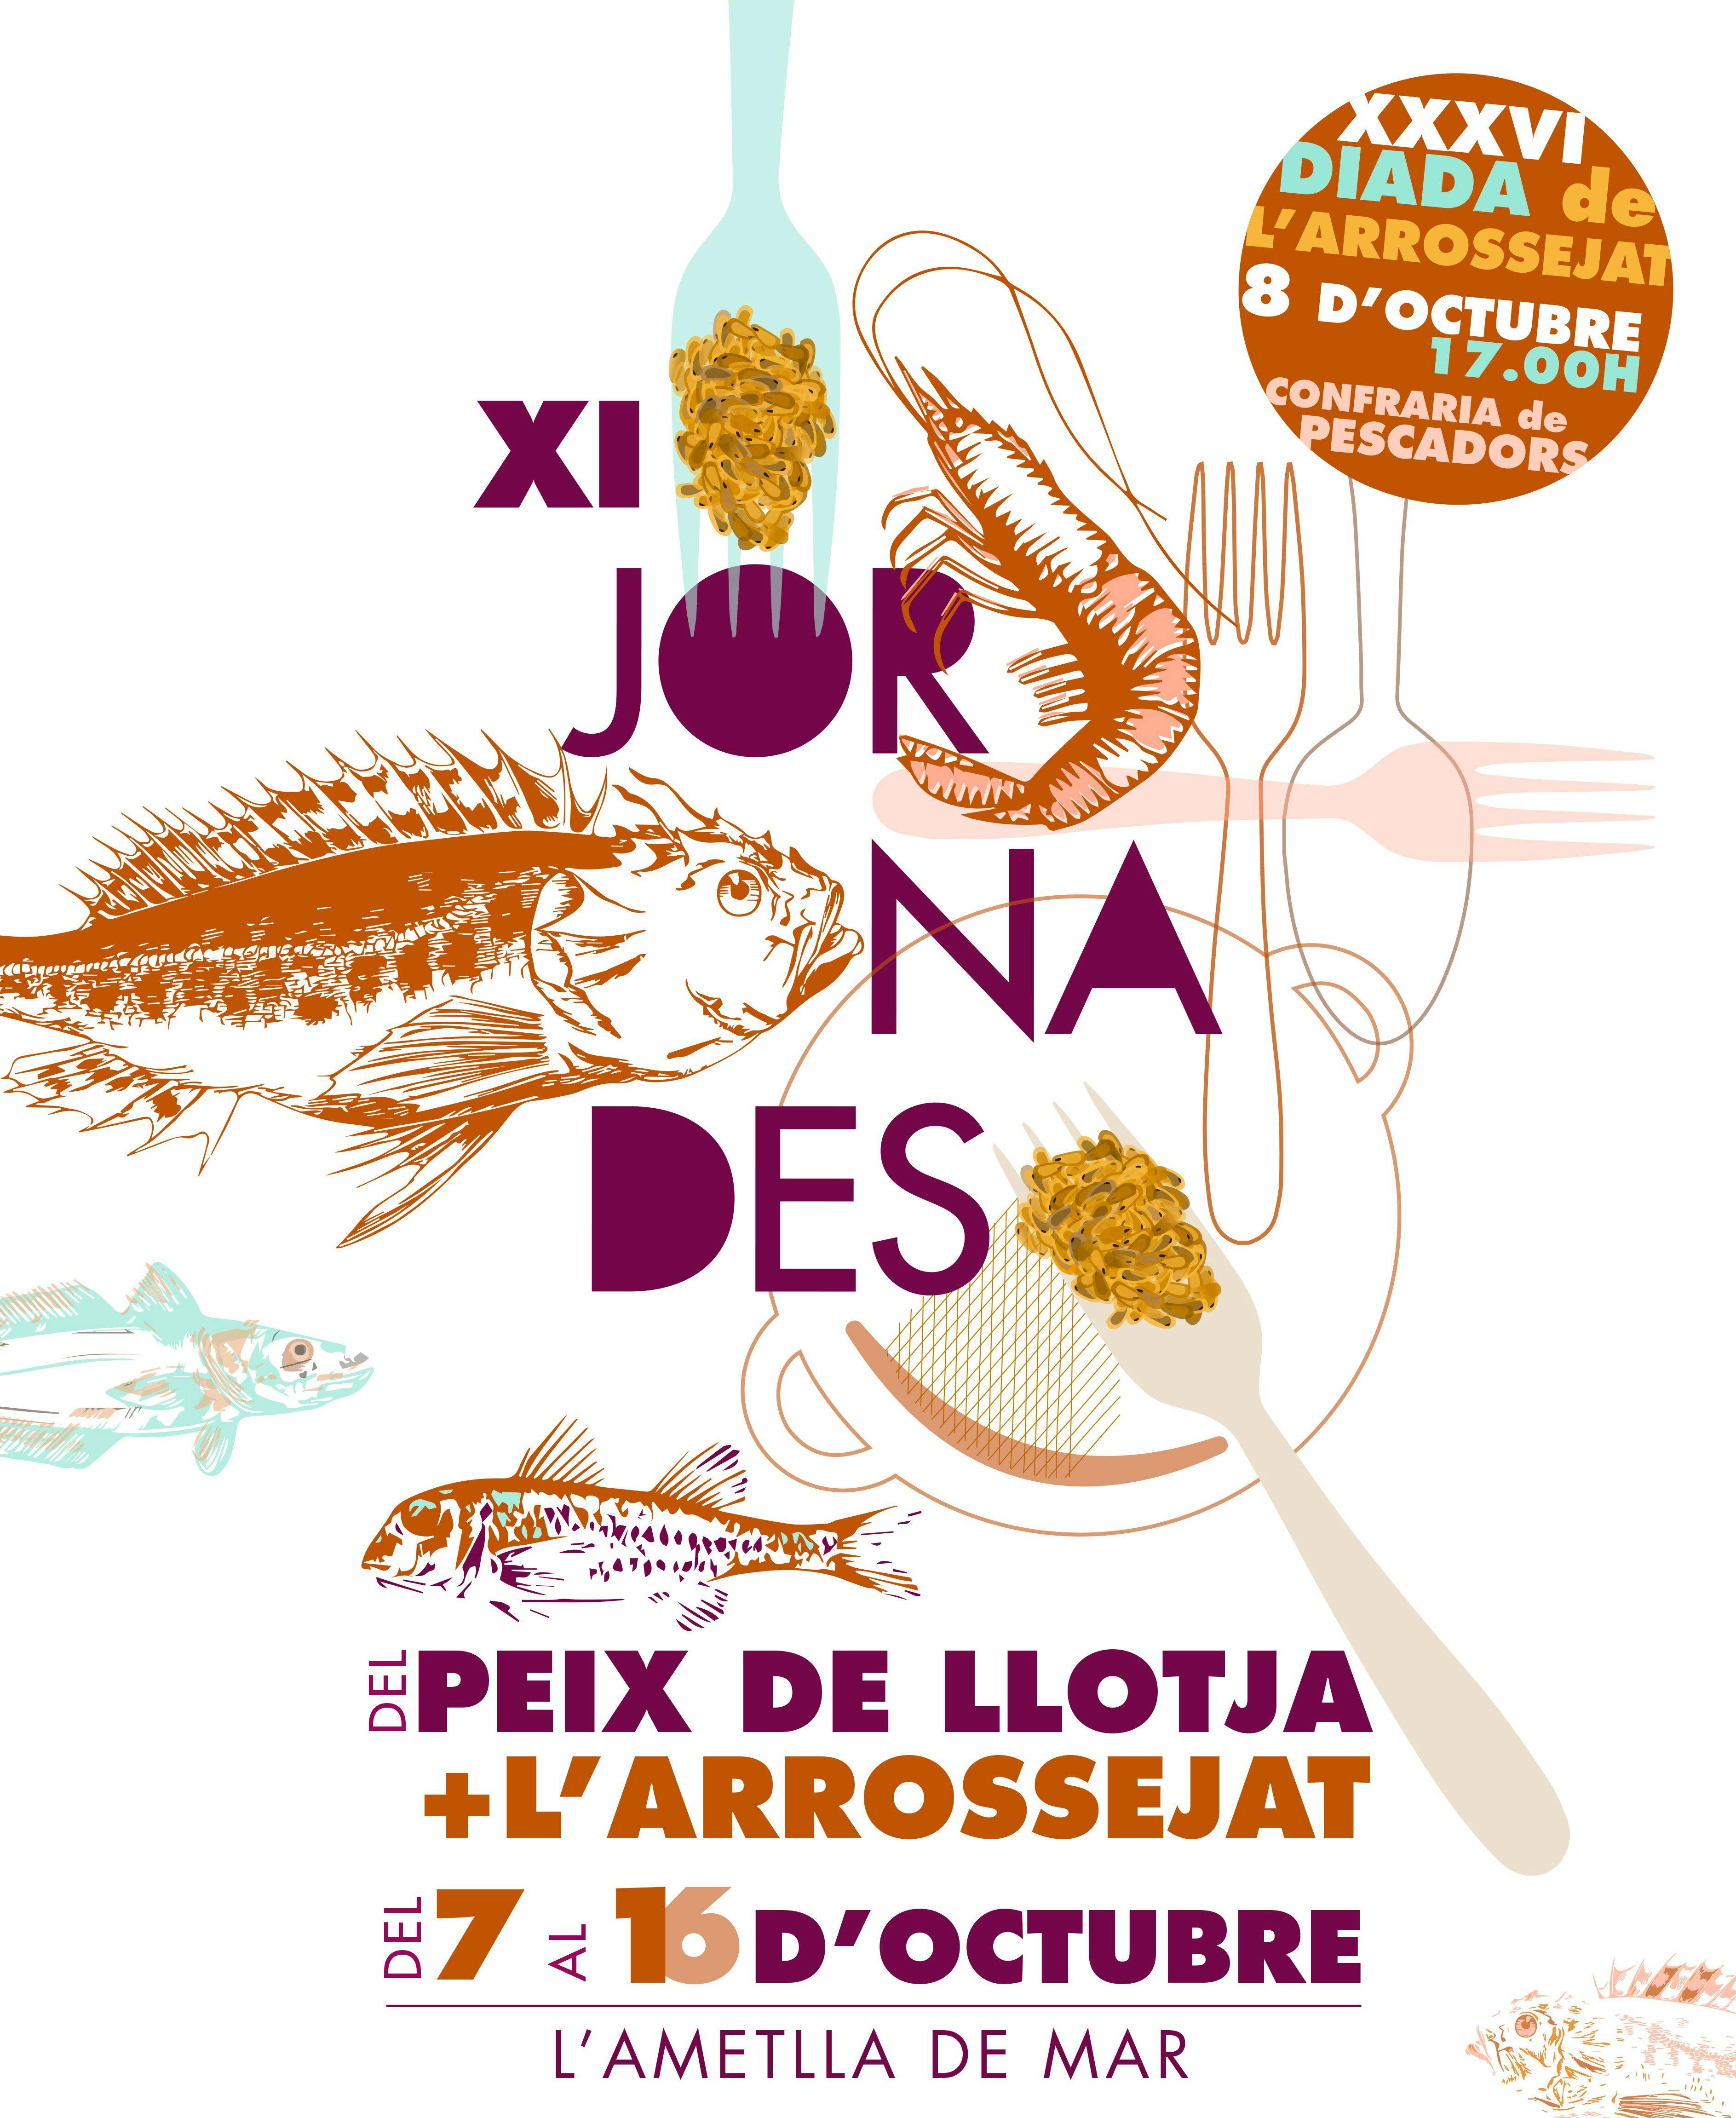 Gastronomic week  for "l'Arrossejat" from L'Ametlla de Mar's Fish Auction